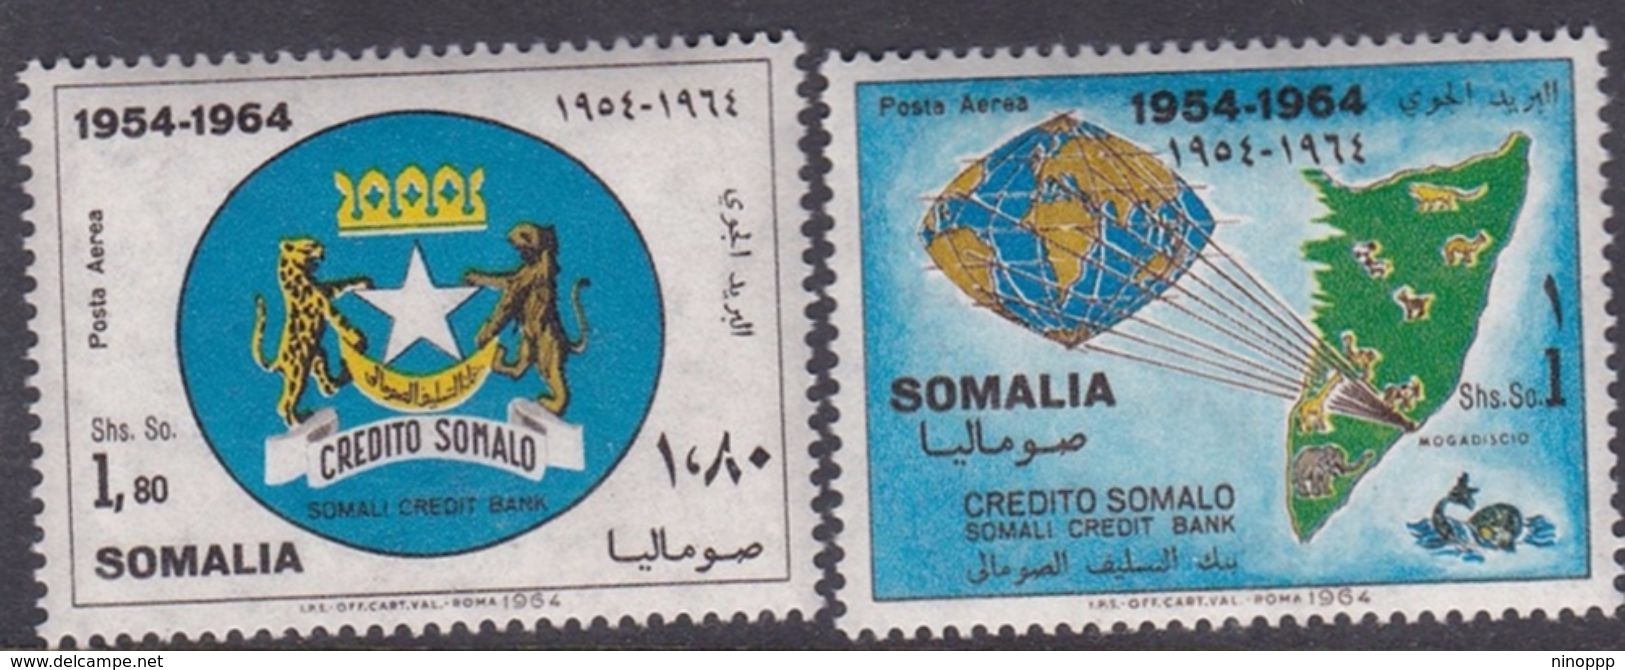 Somalia Scott C93-94 1964 10th Anniversary Of The Somali Credit Bank, Mint Never Hinged - Somalia (AFIS)